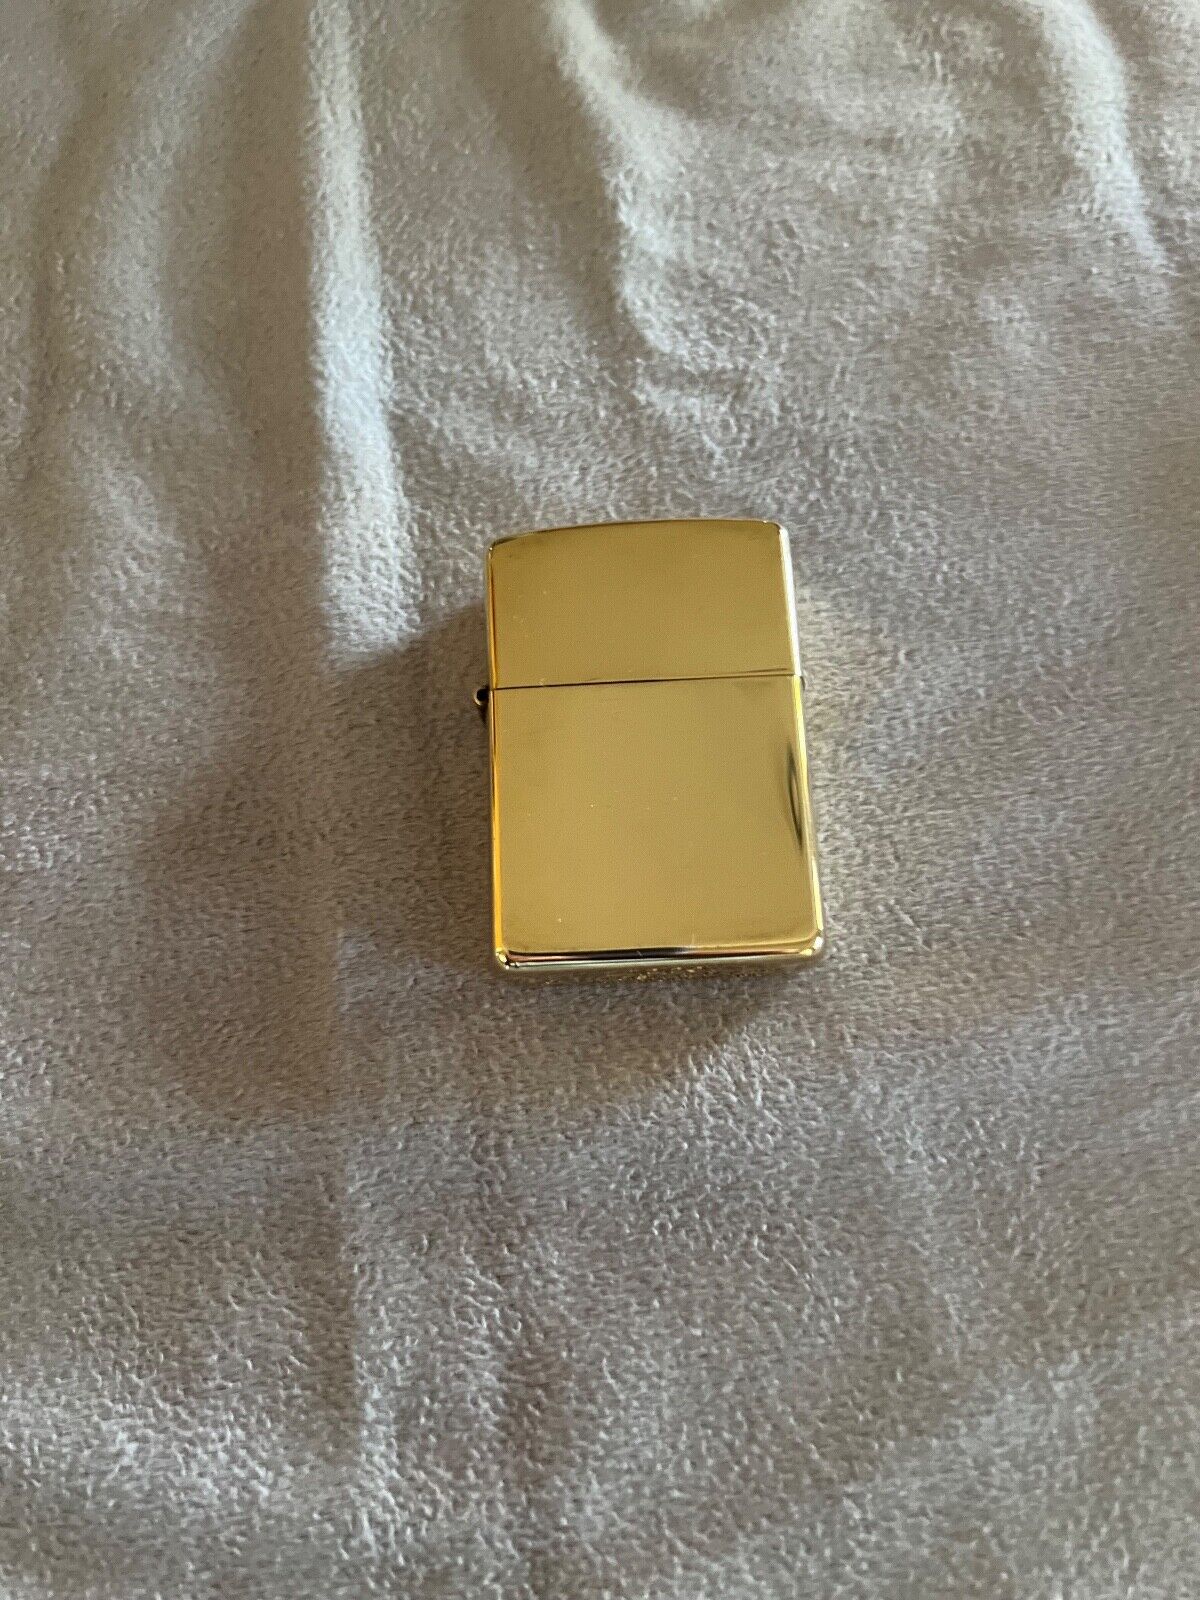 18k solid gold zippo lighter